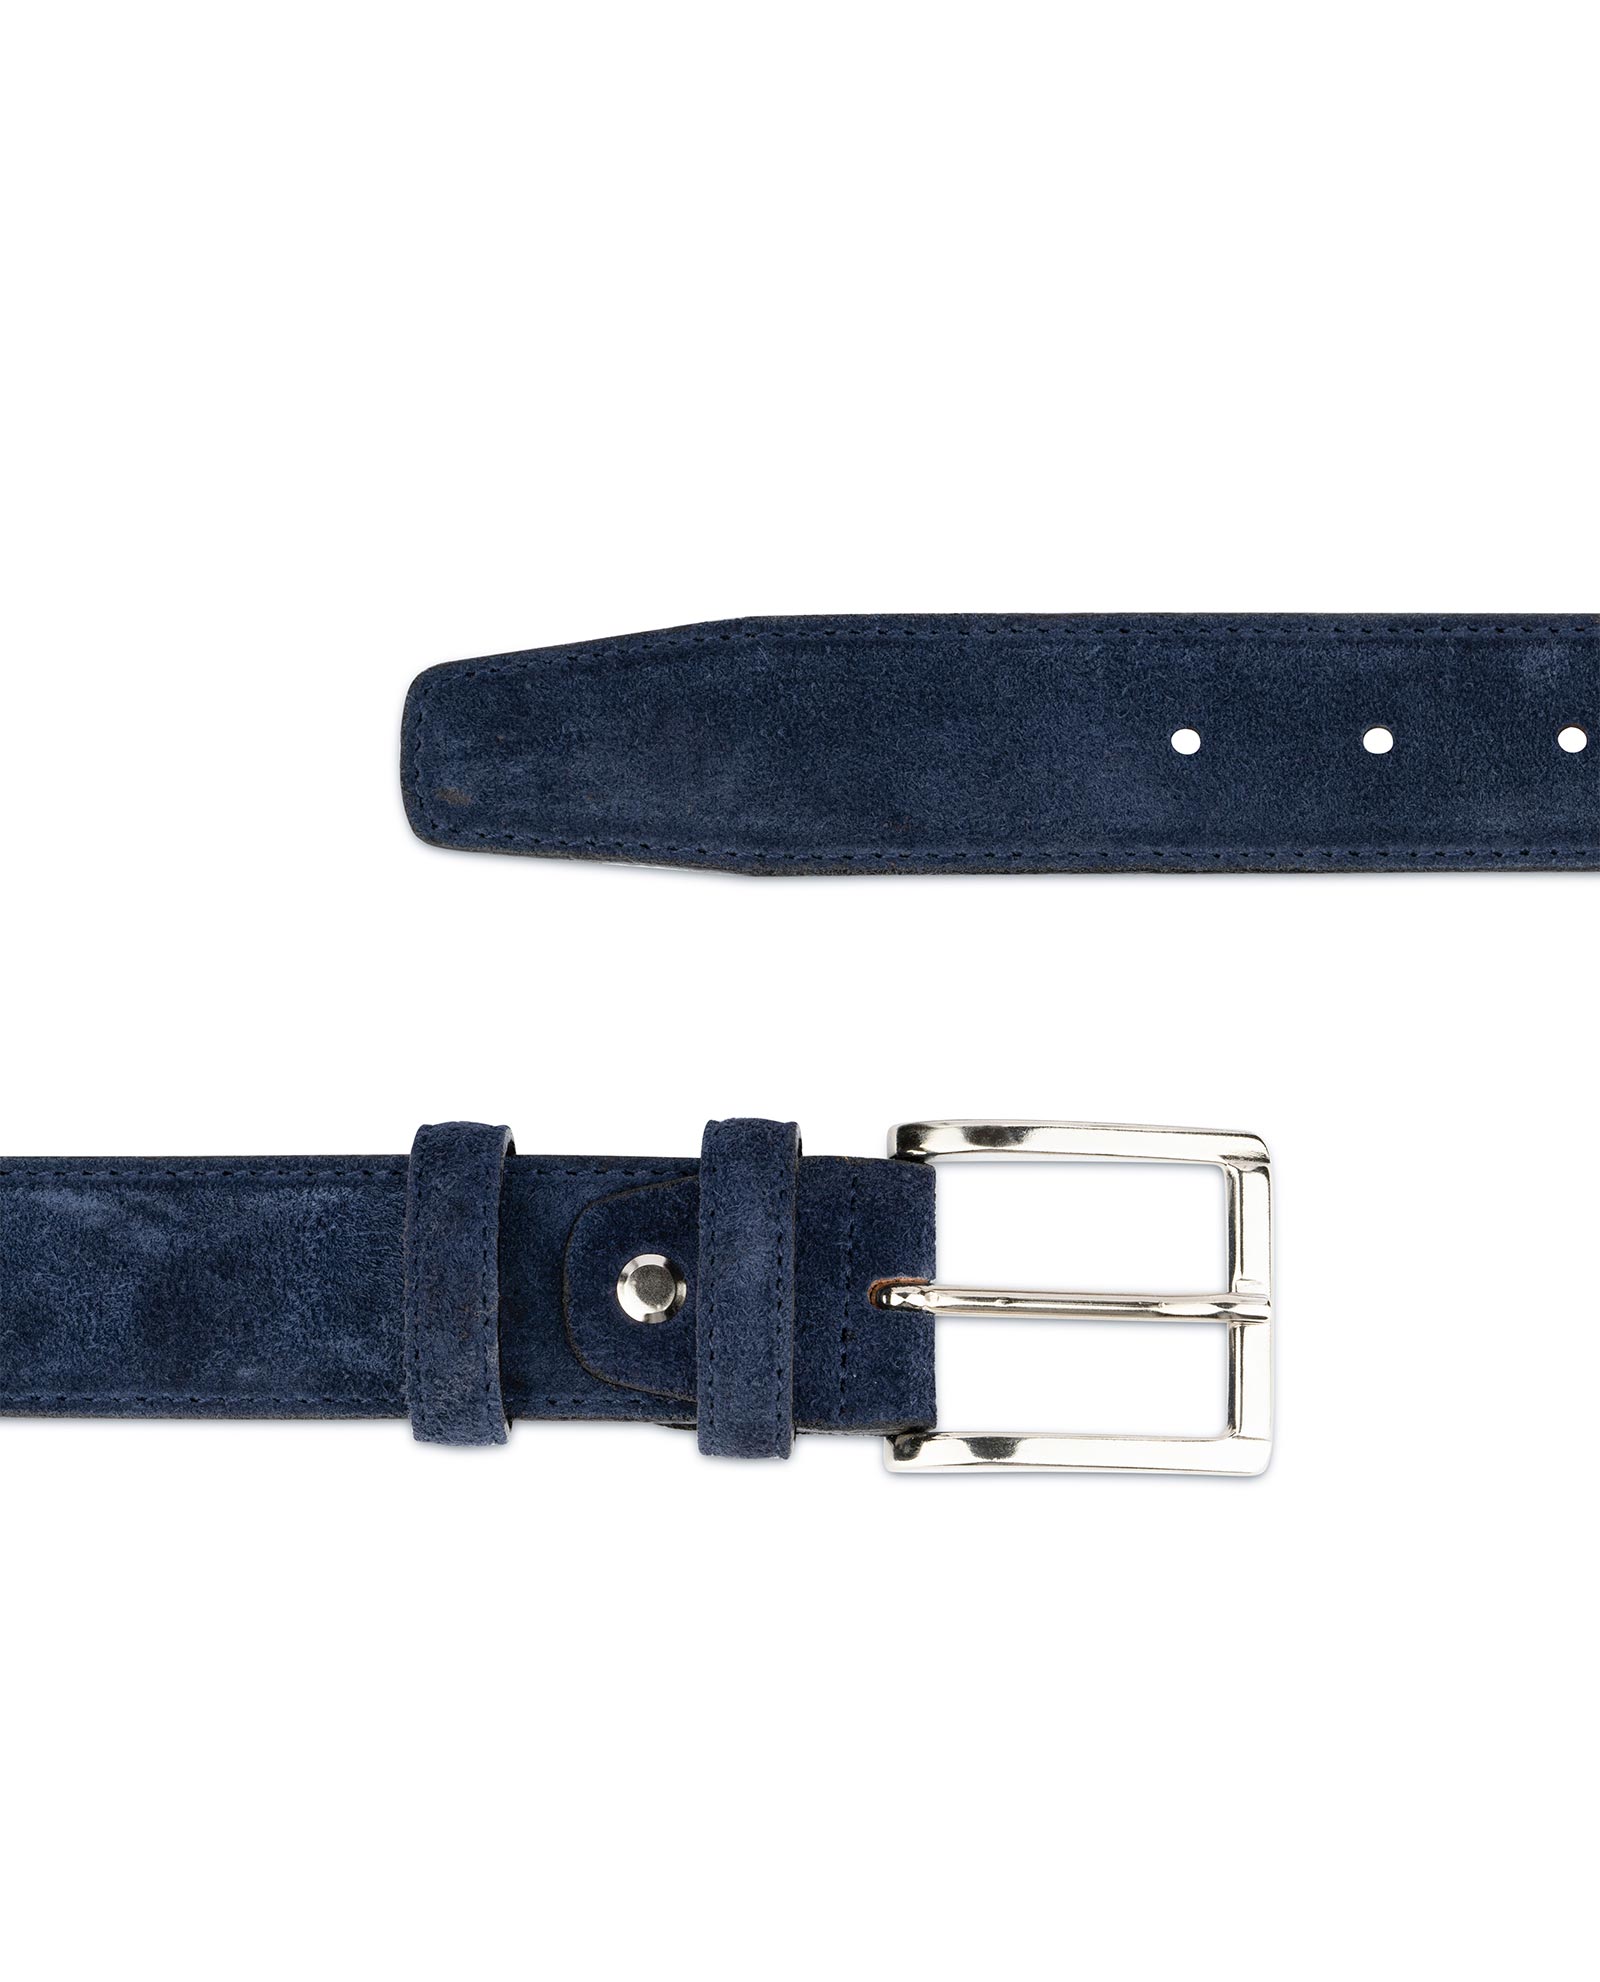 Blue suede belt Genuine leather Italian Navy Men's belts White edges Fashion 